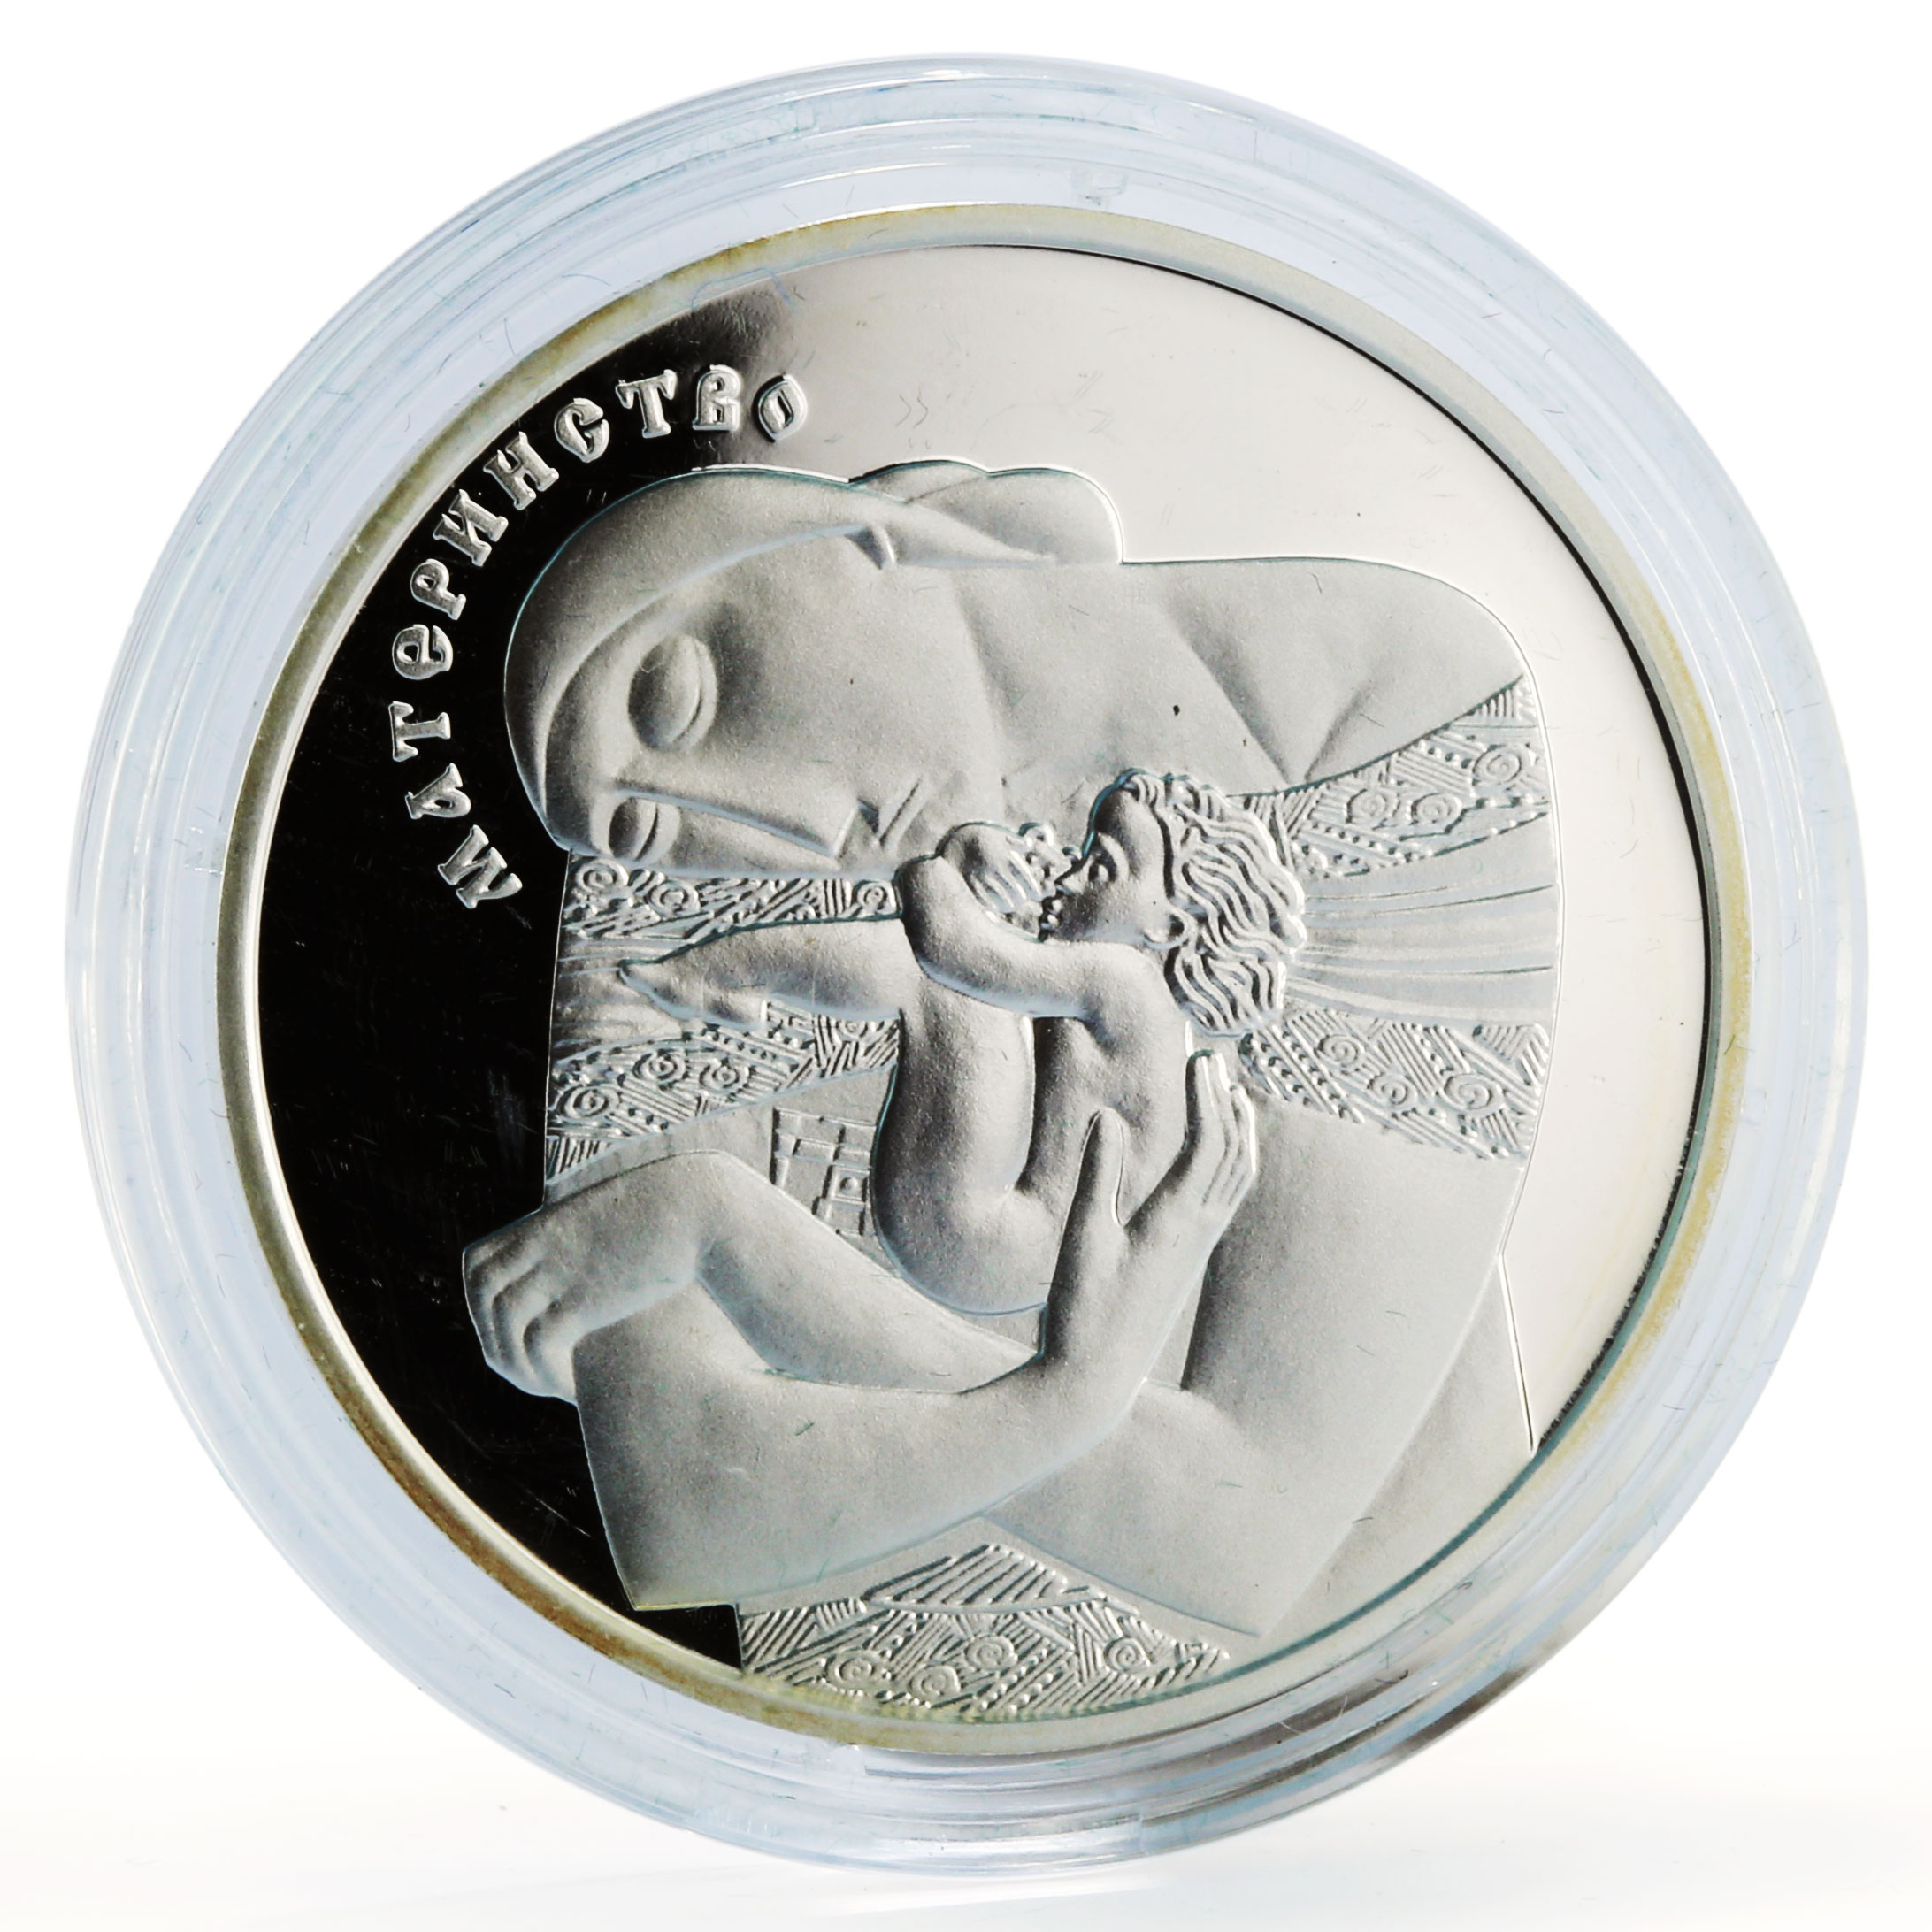 Ukraine 5 hryvnia Motherhood Pram silver proof coin 2013